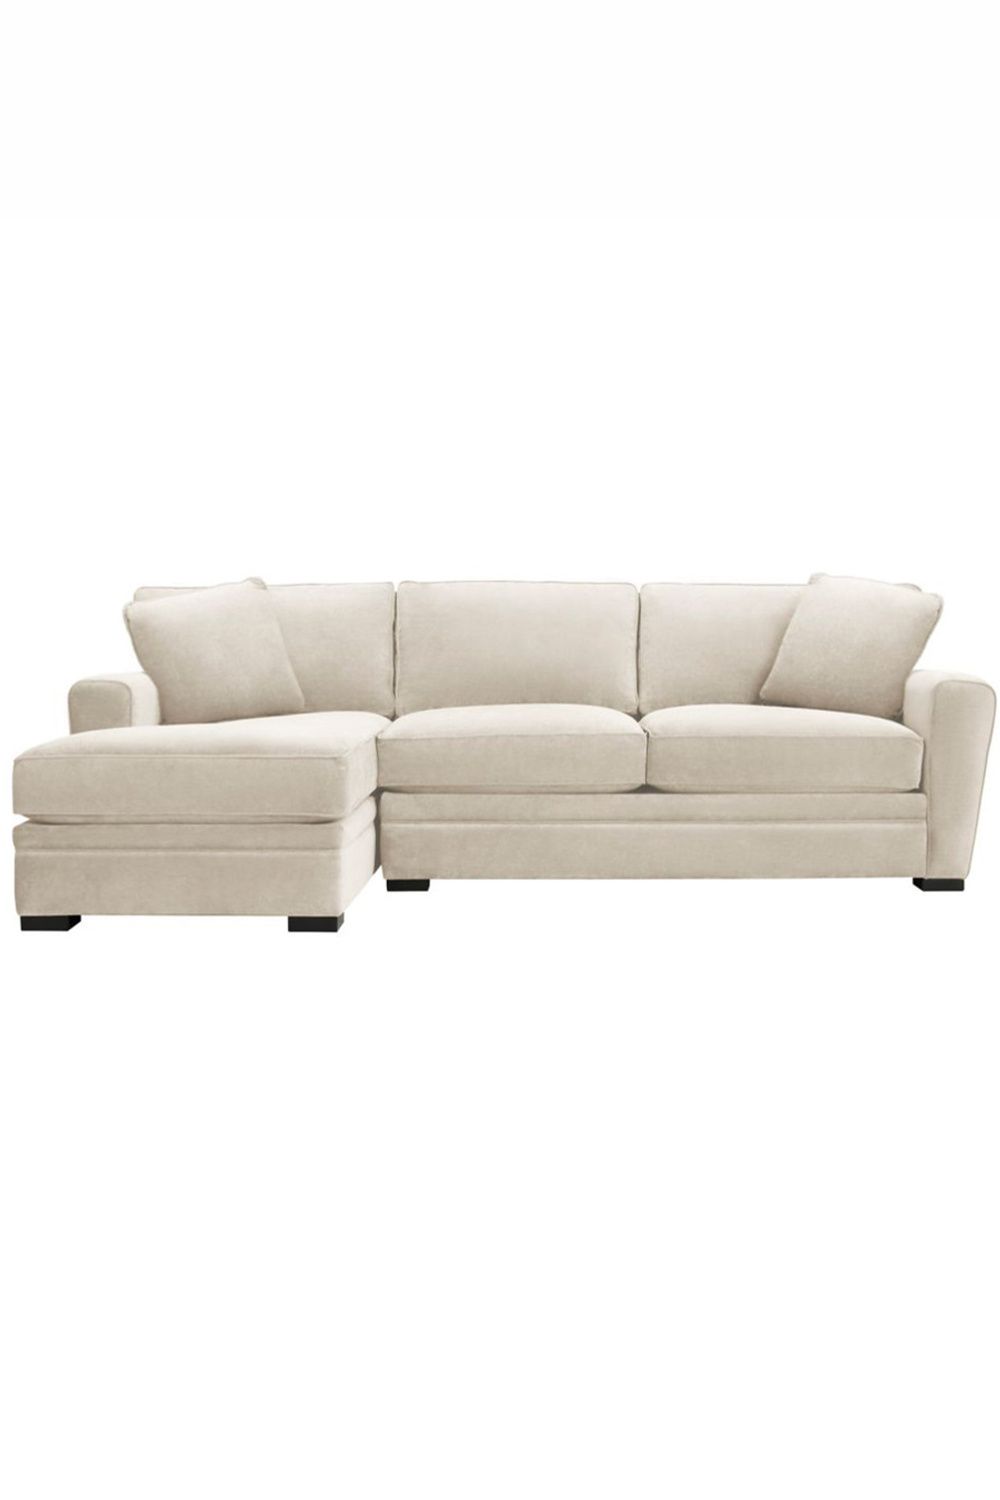 A microfiber sectional sofa is a
beautiful sofa for living room decor